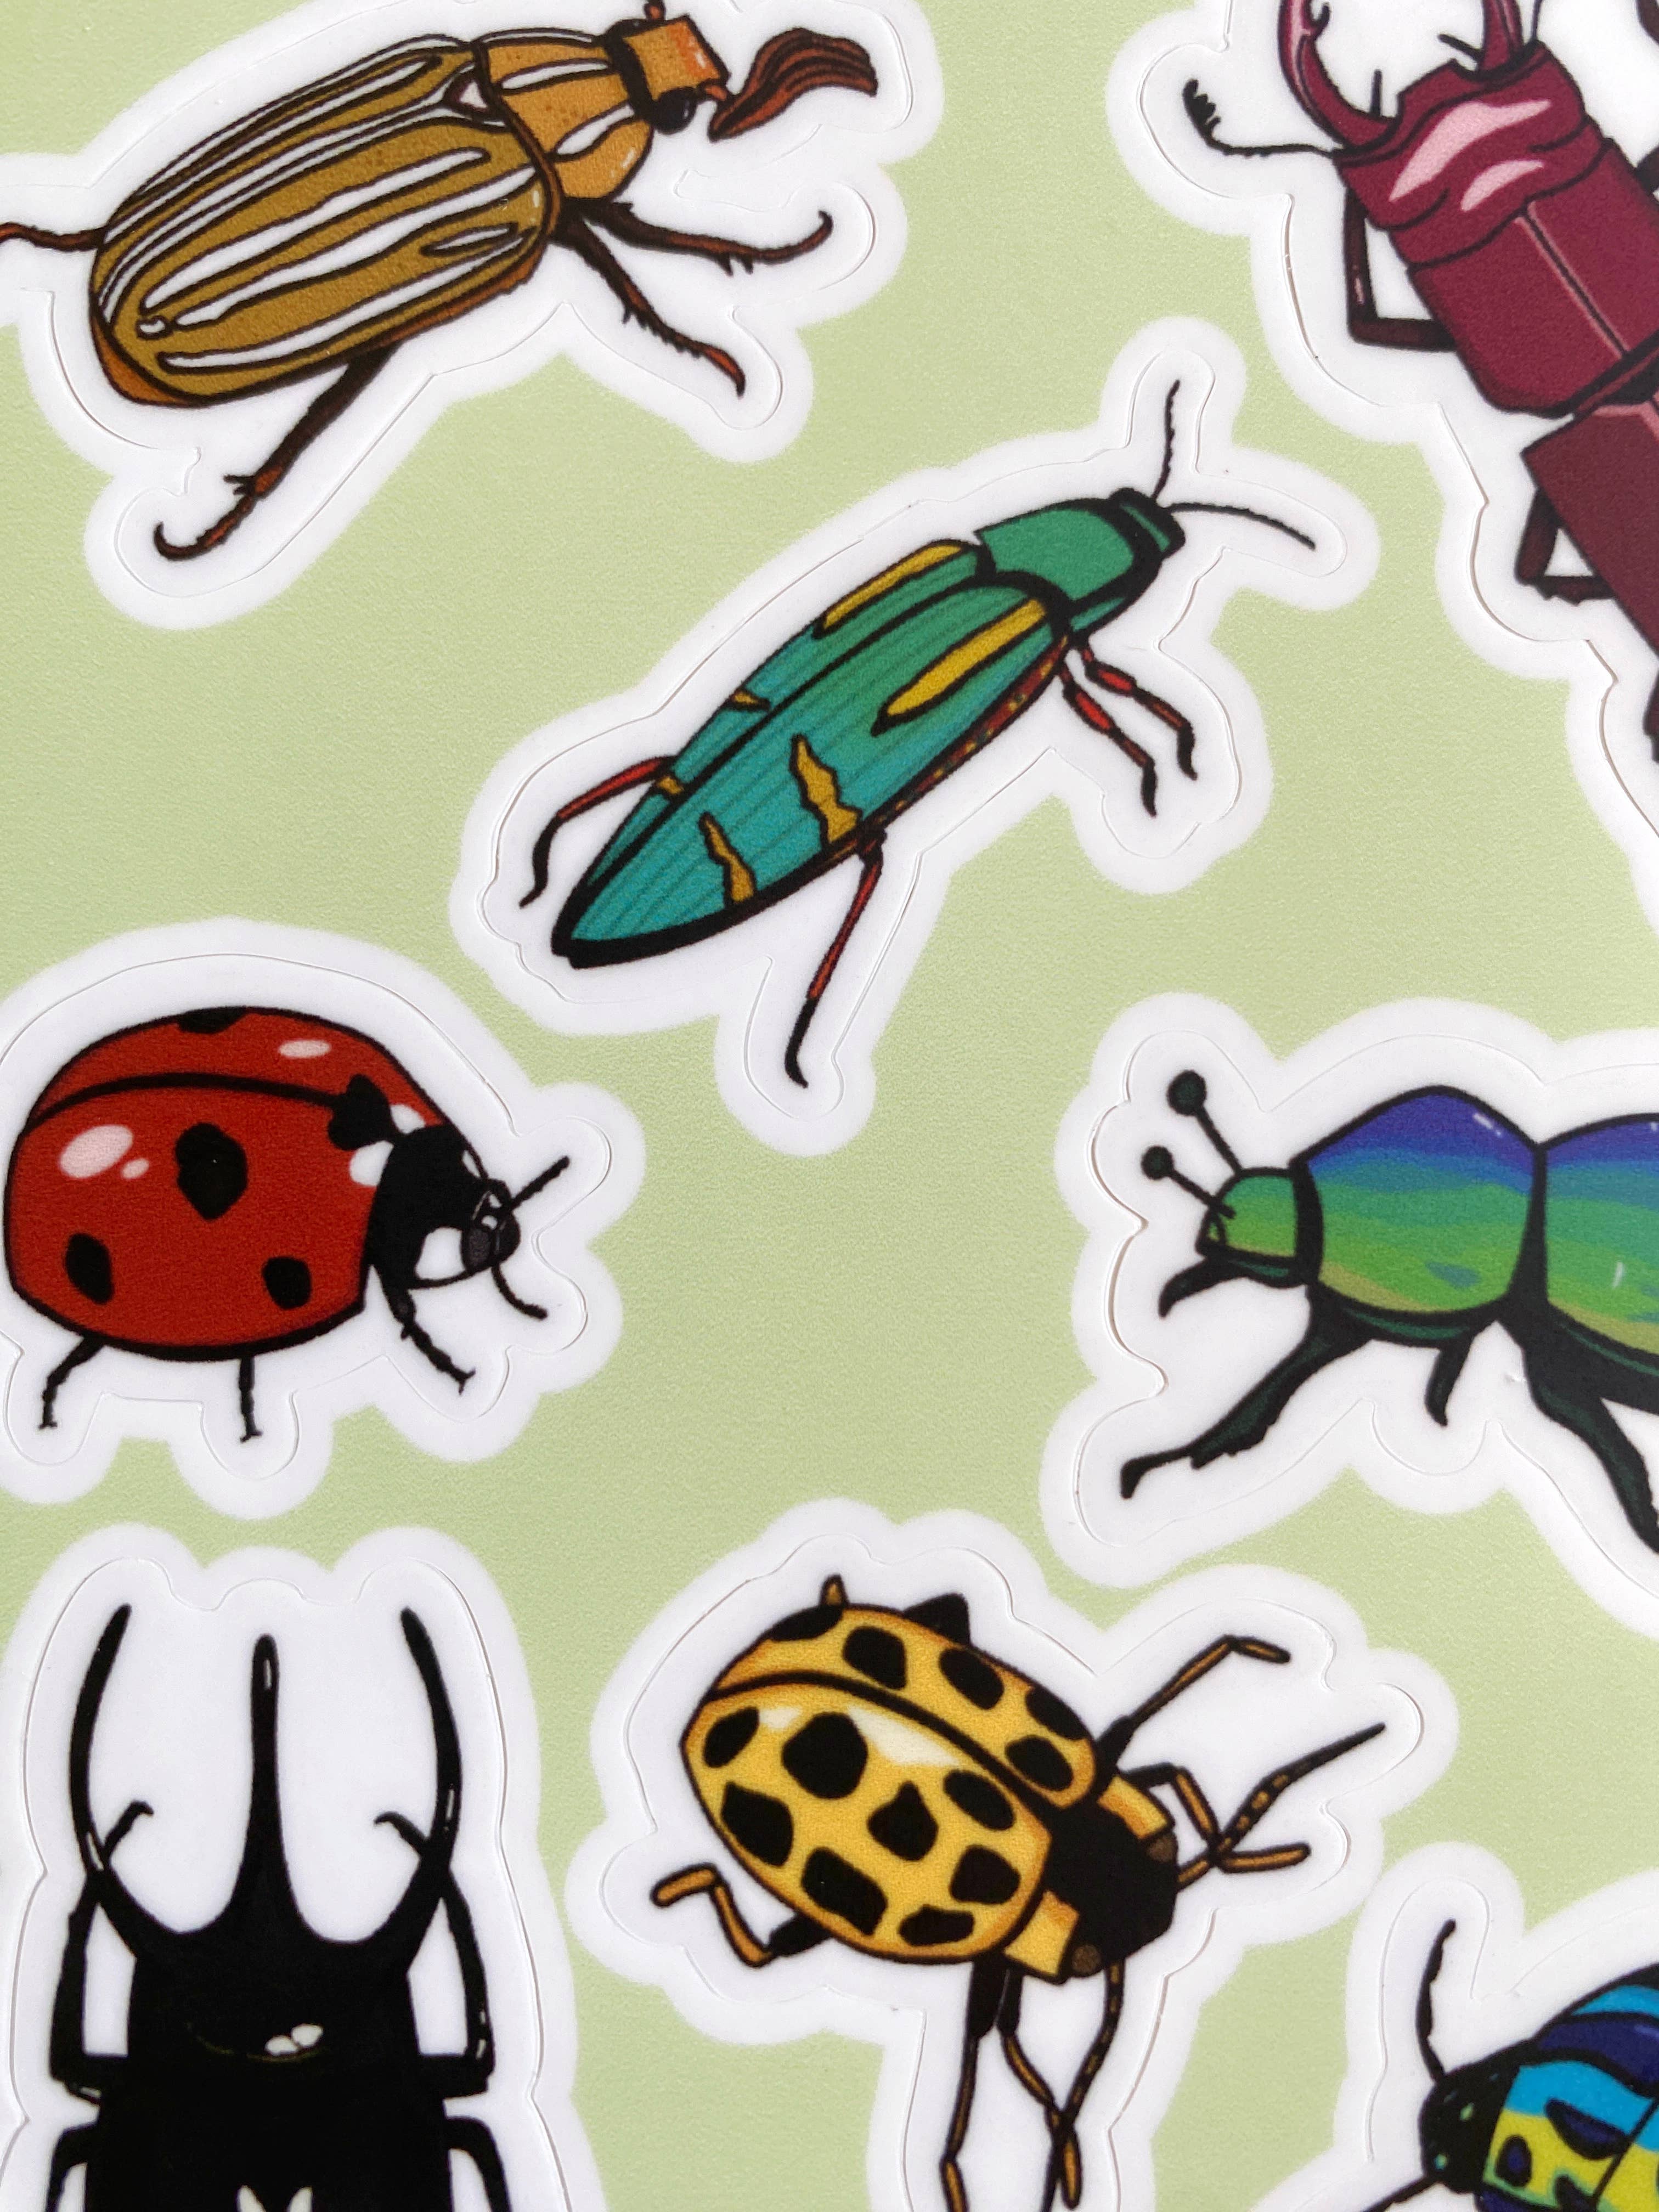 Beetle 4"x6" Sticker Sheet